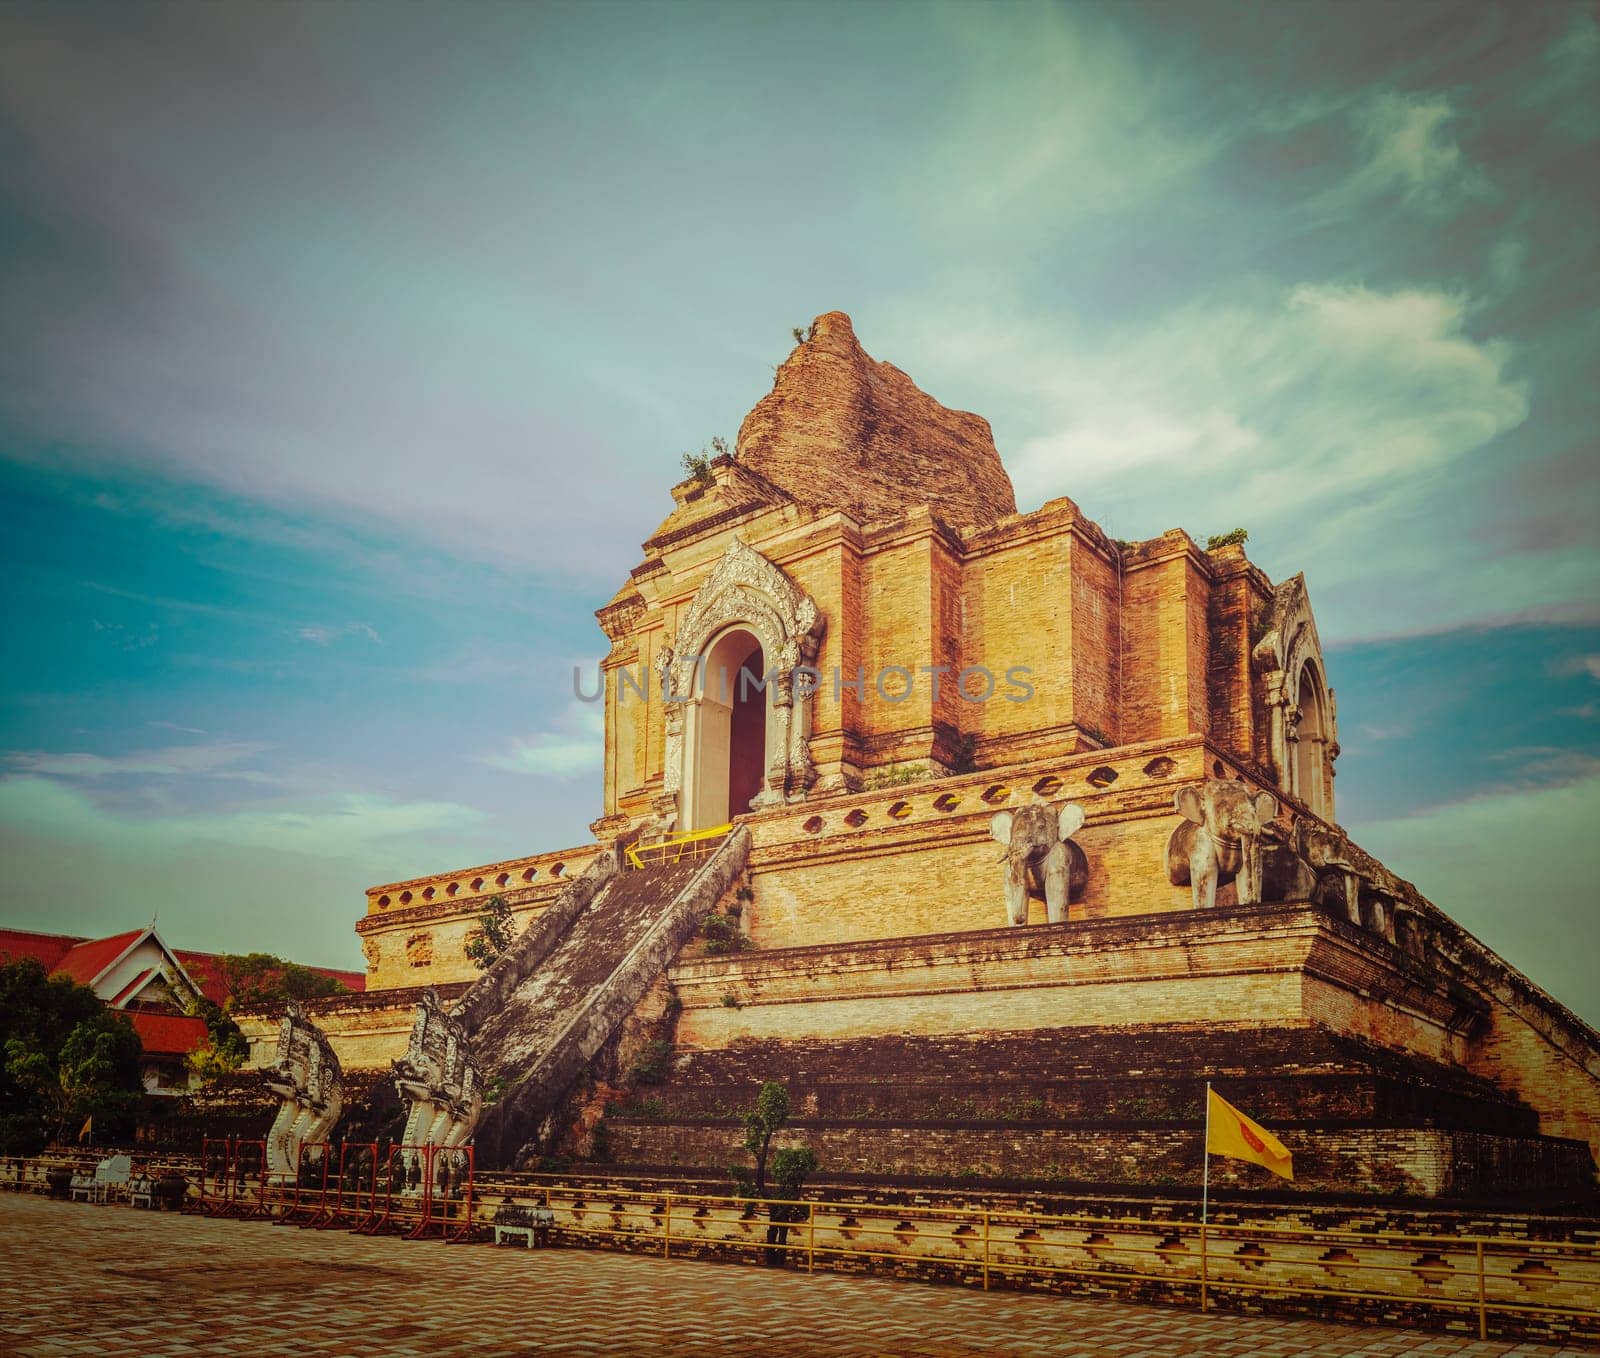 Wat Chedi Luang. Chiang Mai, Thailand by dimol